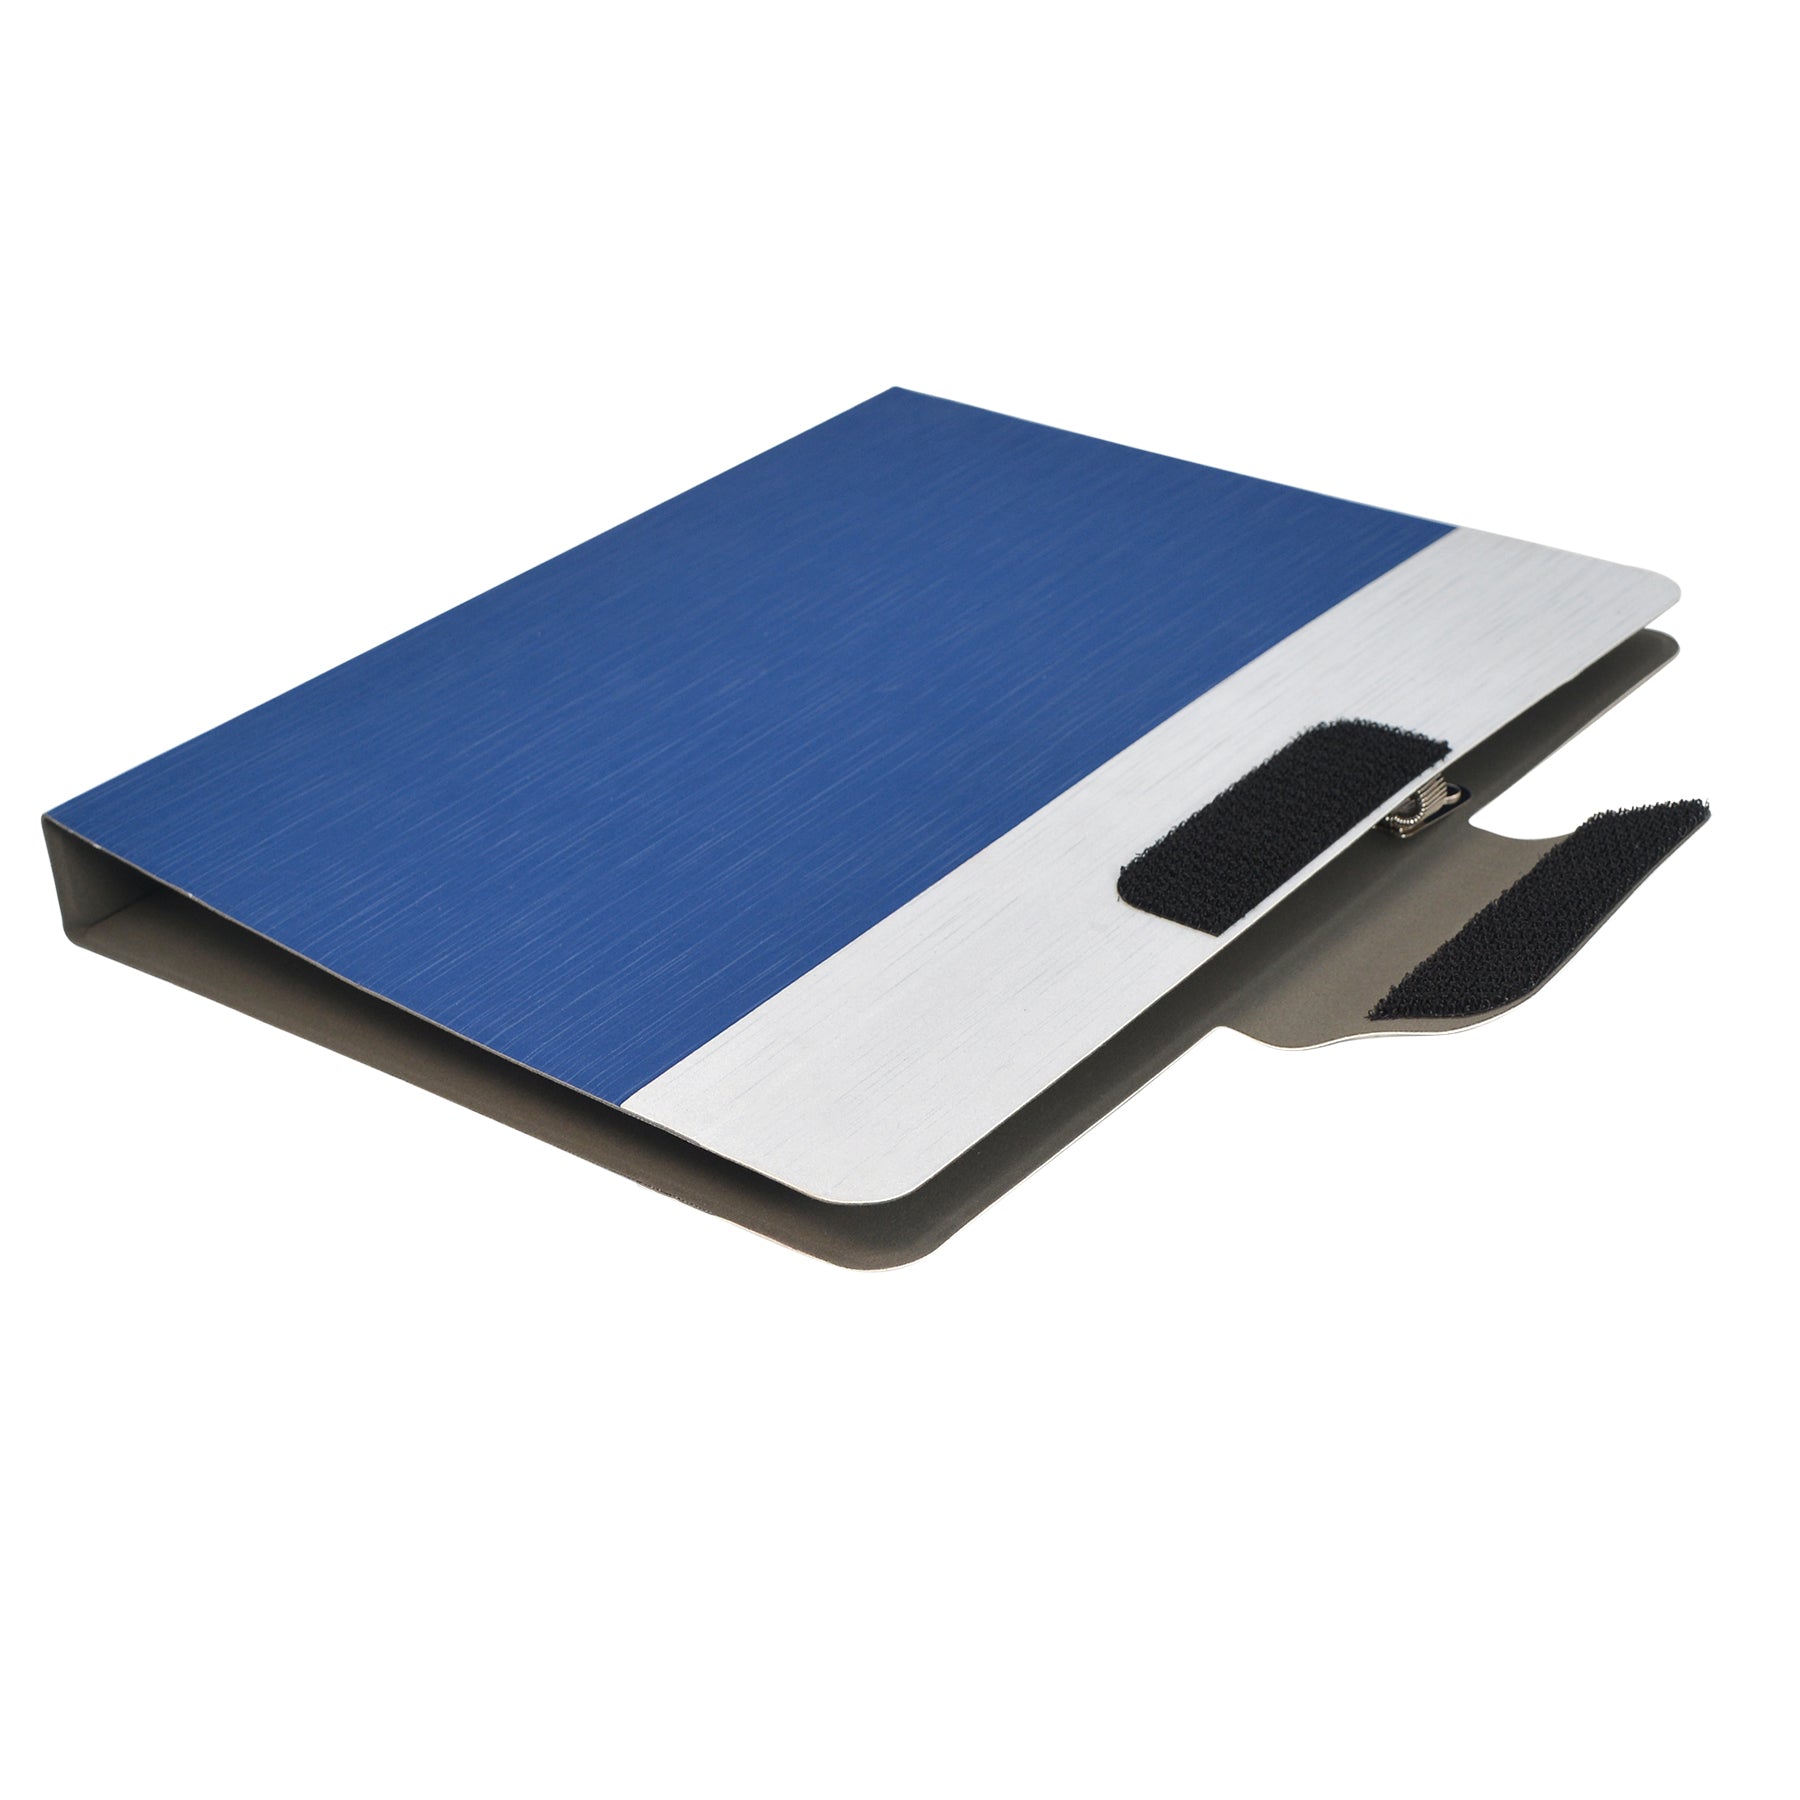 Ring Binder Portfolio Case with Dry Erase Surface and Document Pocket, –  epadfolios